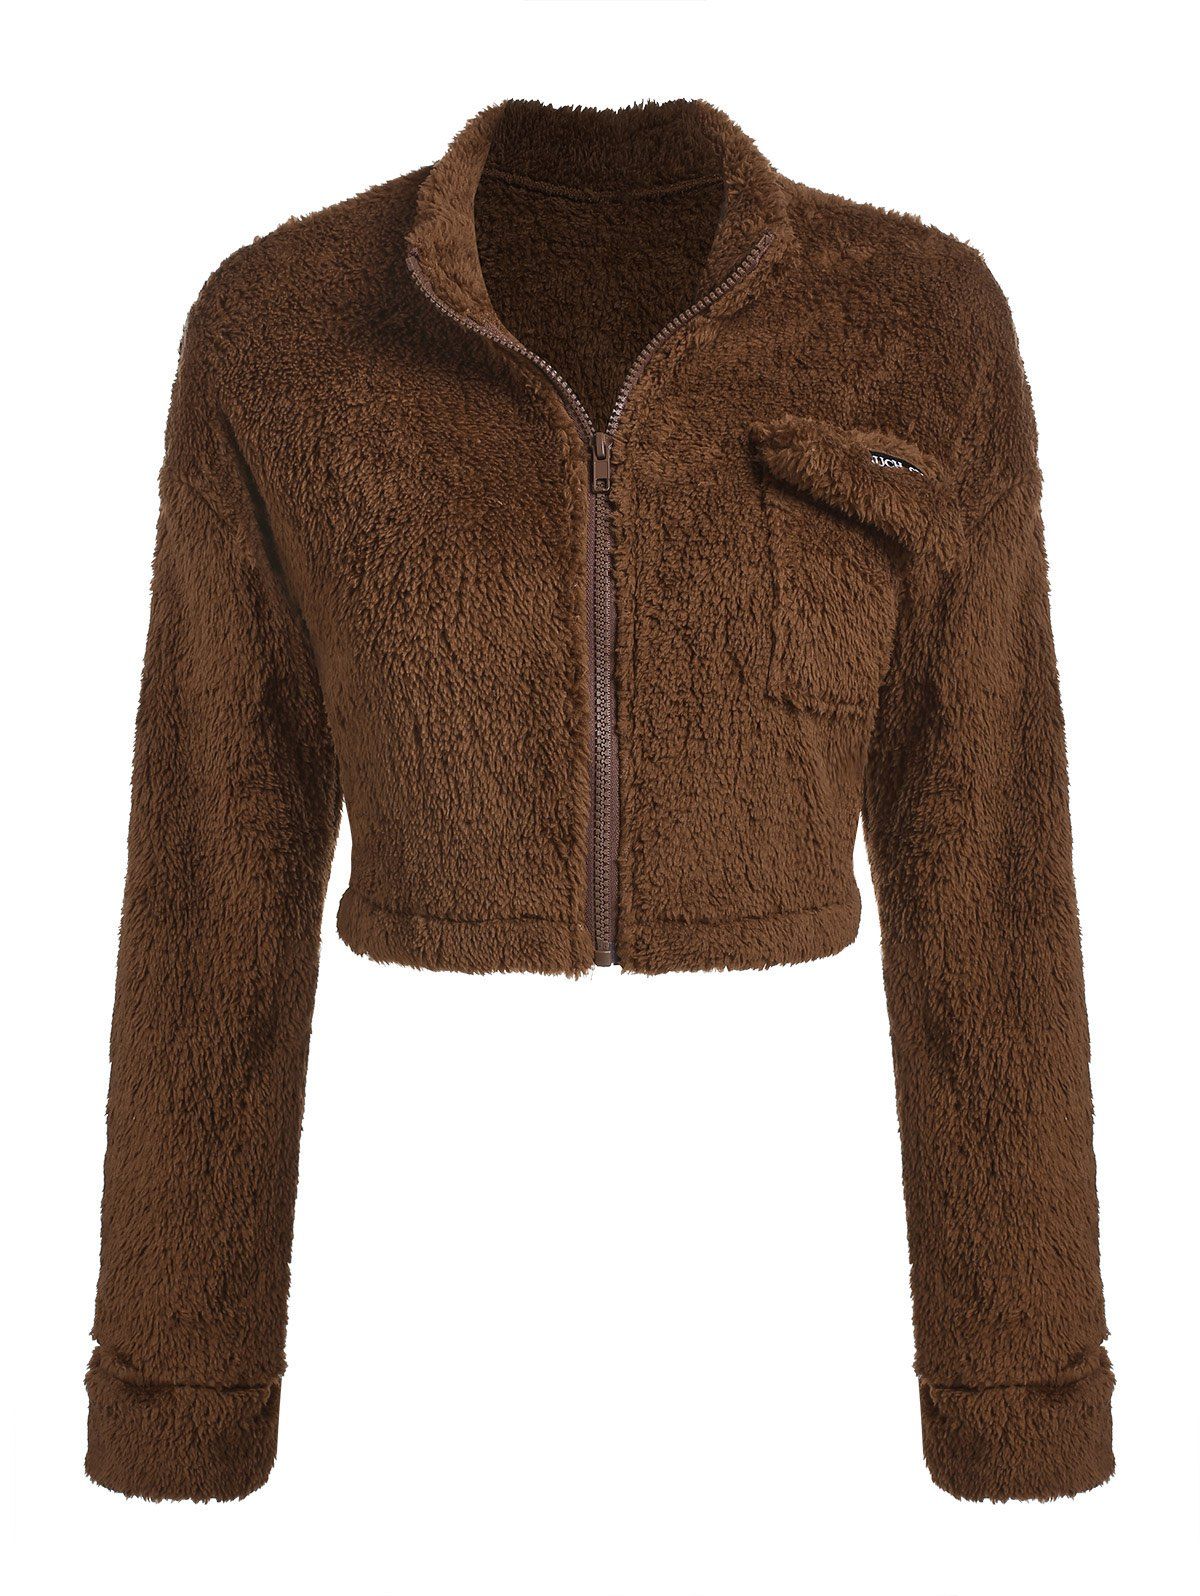 Faux Fur Flap Pockets Cropped Fuzzy Jacket - DEEP COFFEE M